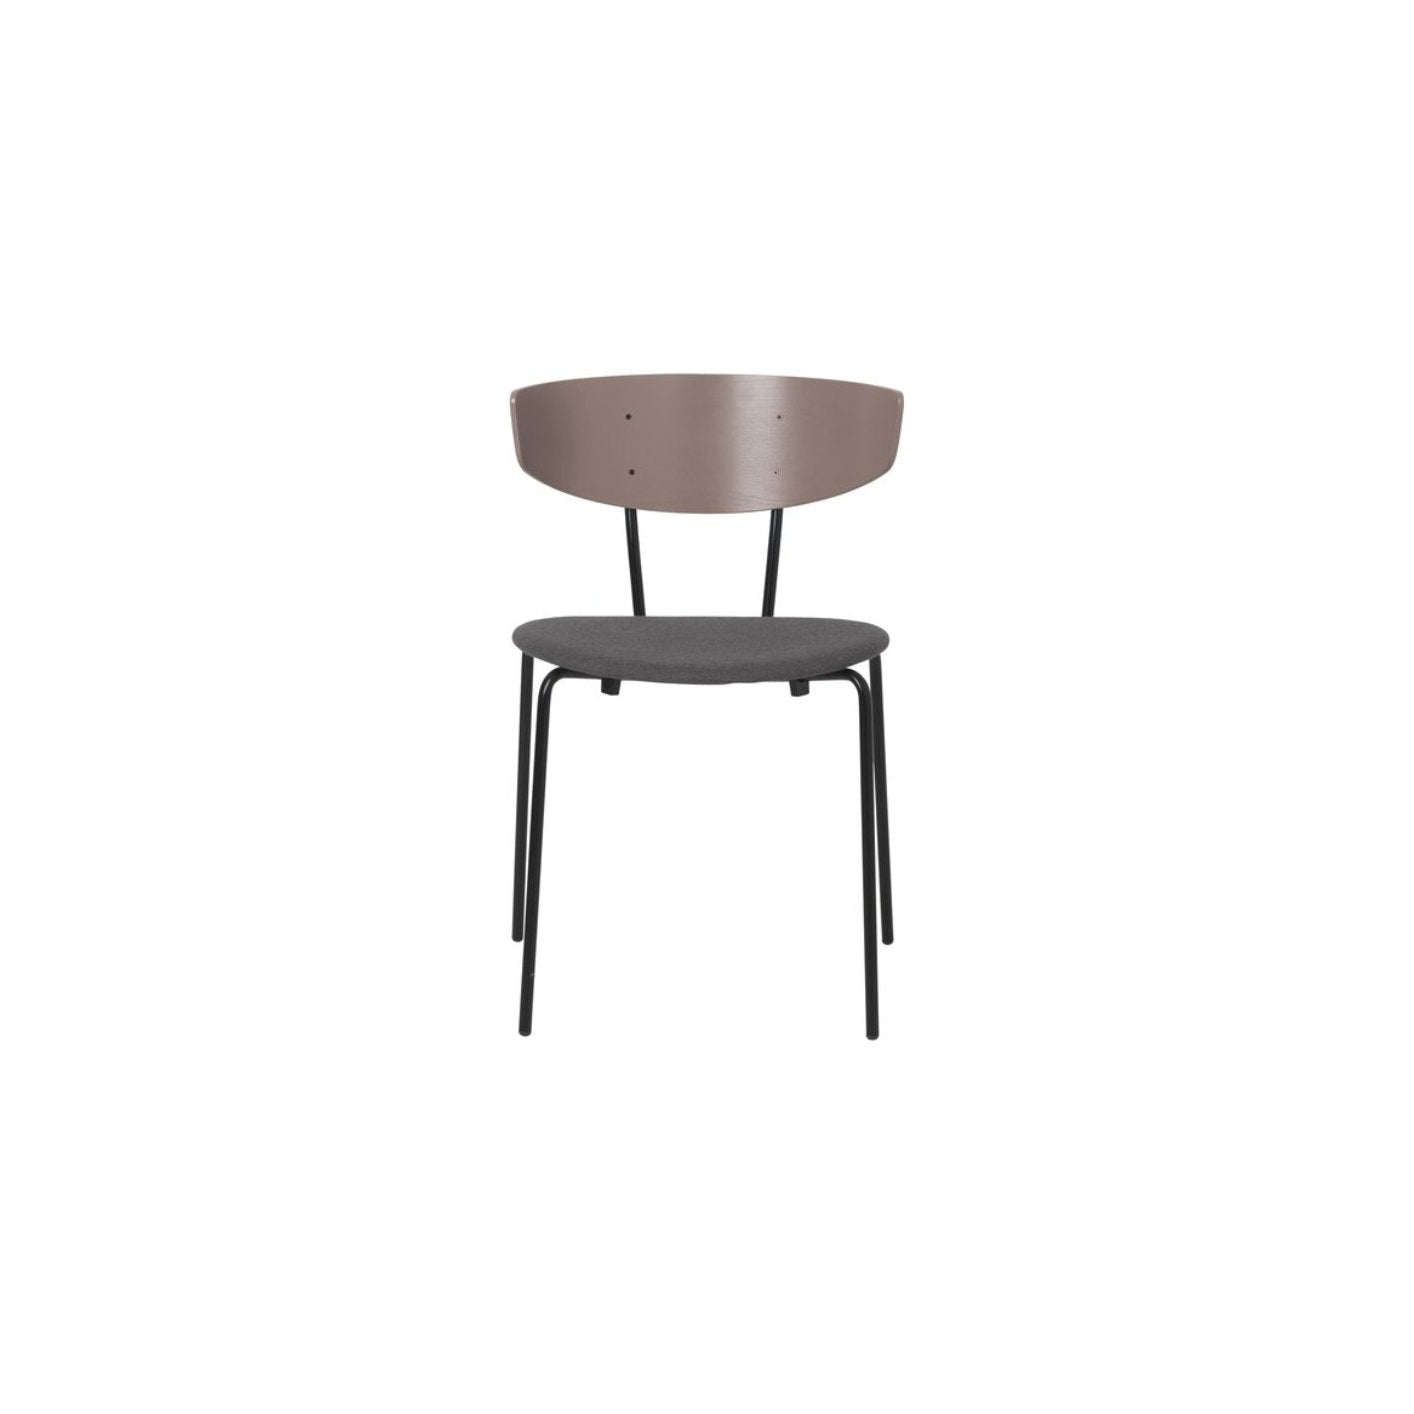 Ferm Living Herman Chair Upholstered, Dark Rose/Warm Grey